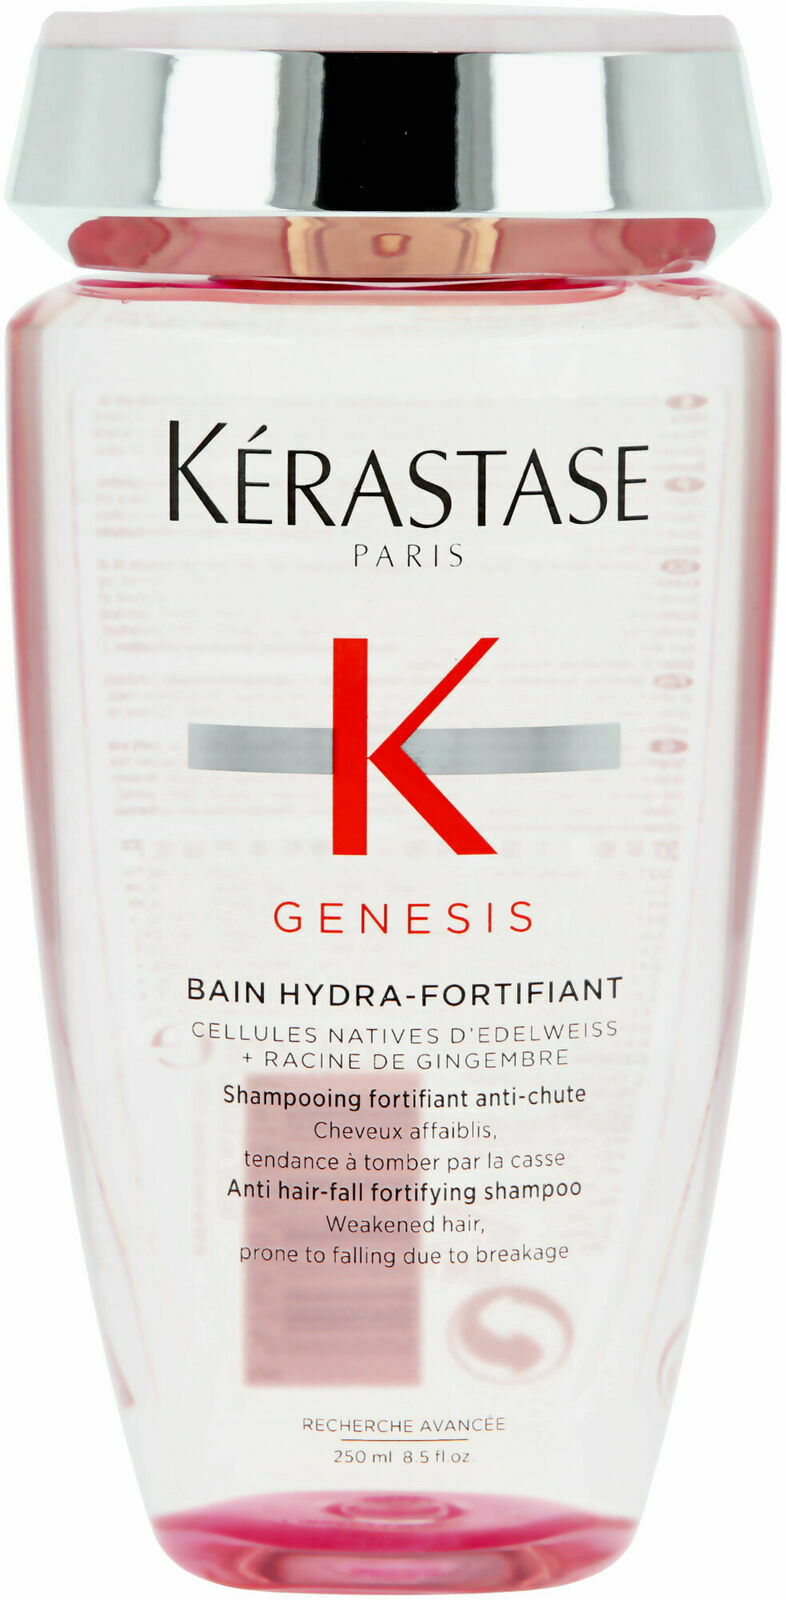 Kerastase Genesis Bain Hydra-Fortifiant Hai – Shampoo Oily to Normal for Zone Shampoo